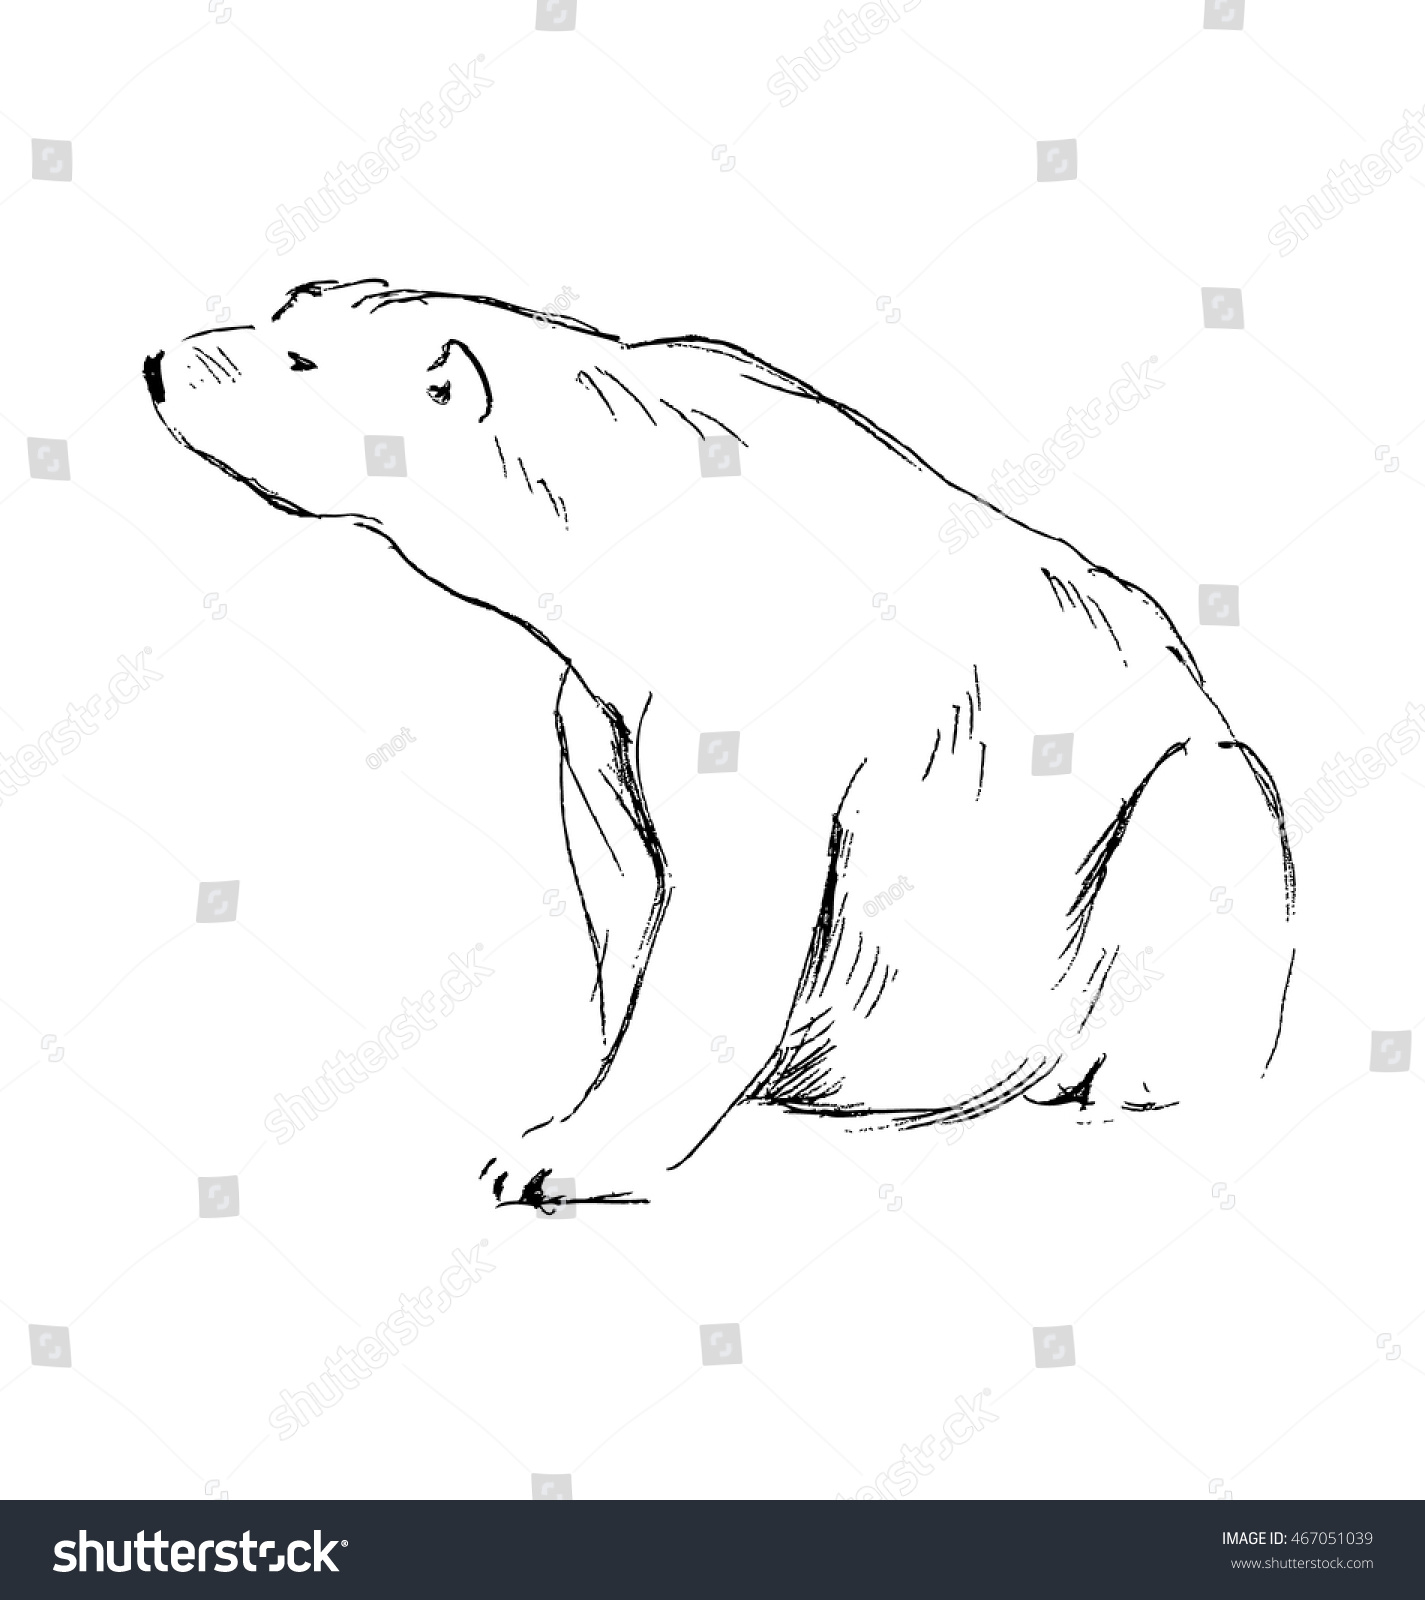 Hand Sketch Sitting Polar Bear Vector Stock Vector (Royalty Free) 467051039